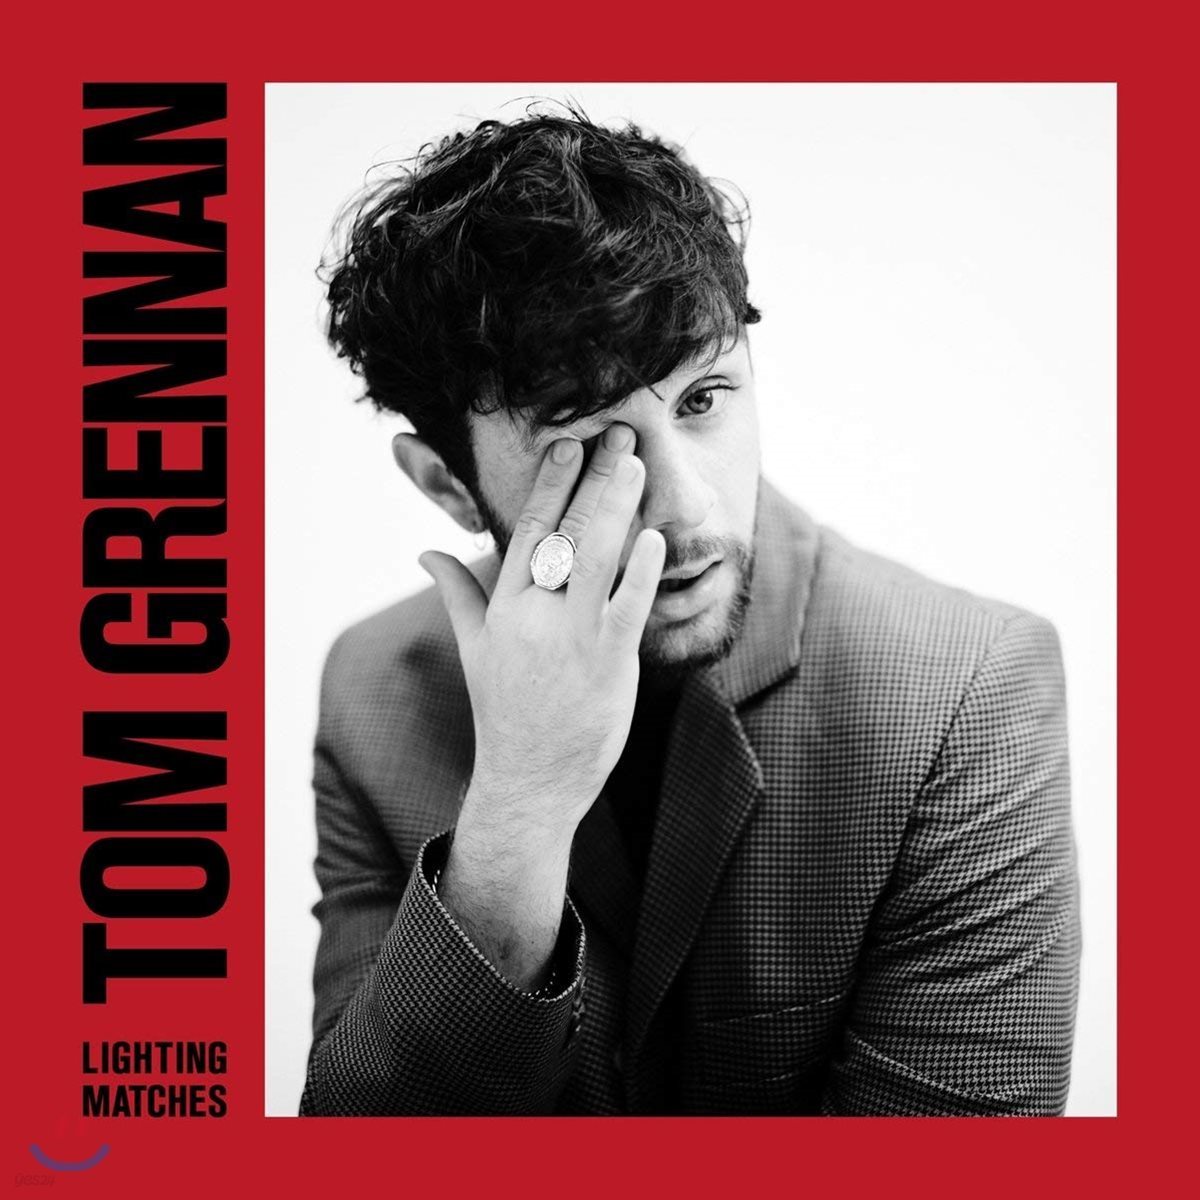 Tom Grennan (톰 그레넌) - Lighting Matches (Explicit Lyrics) [LP]